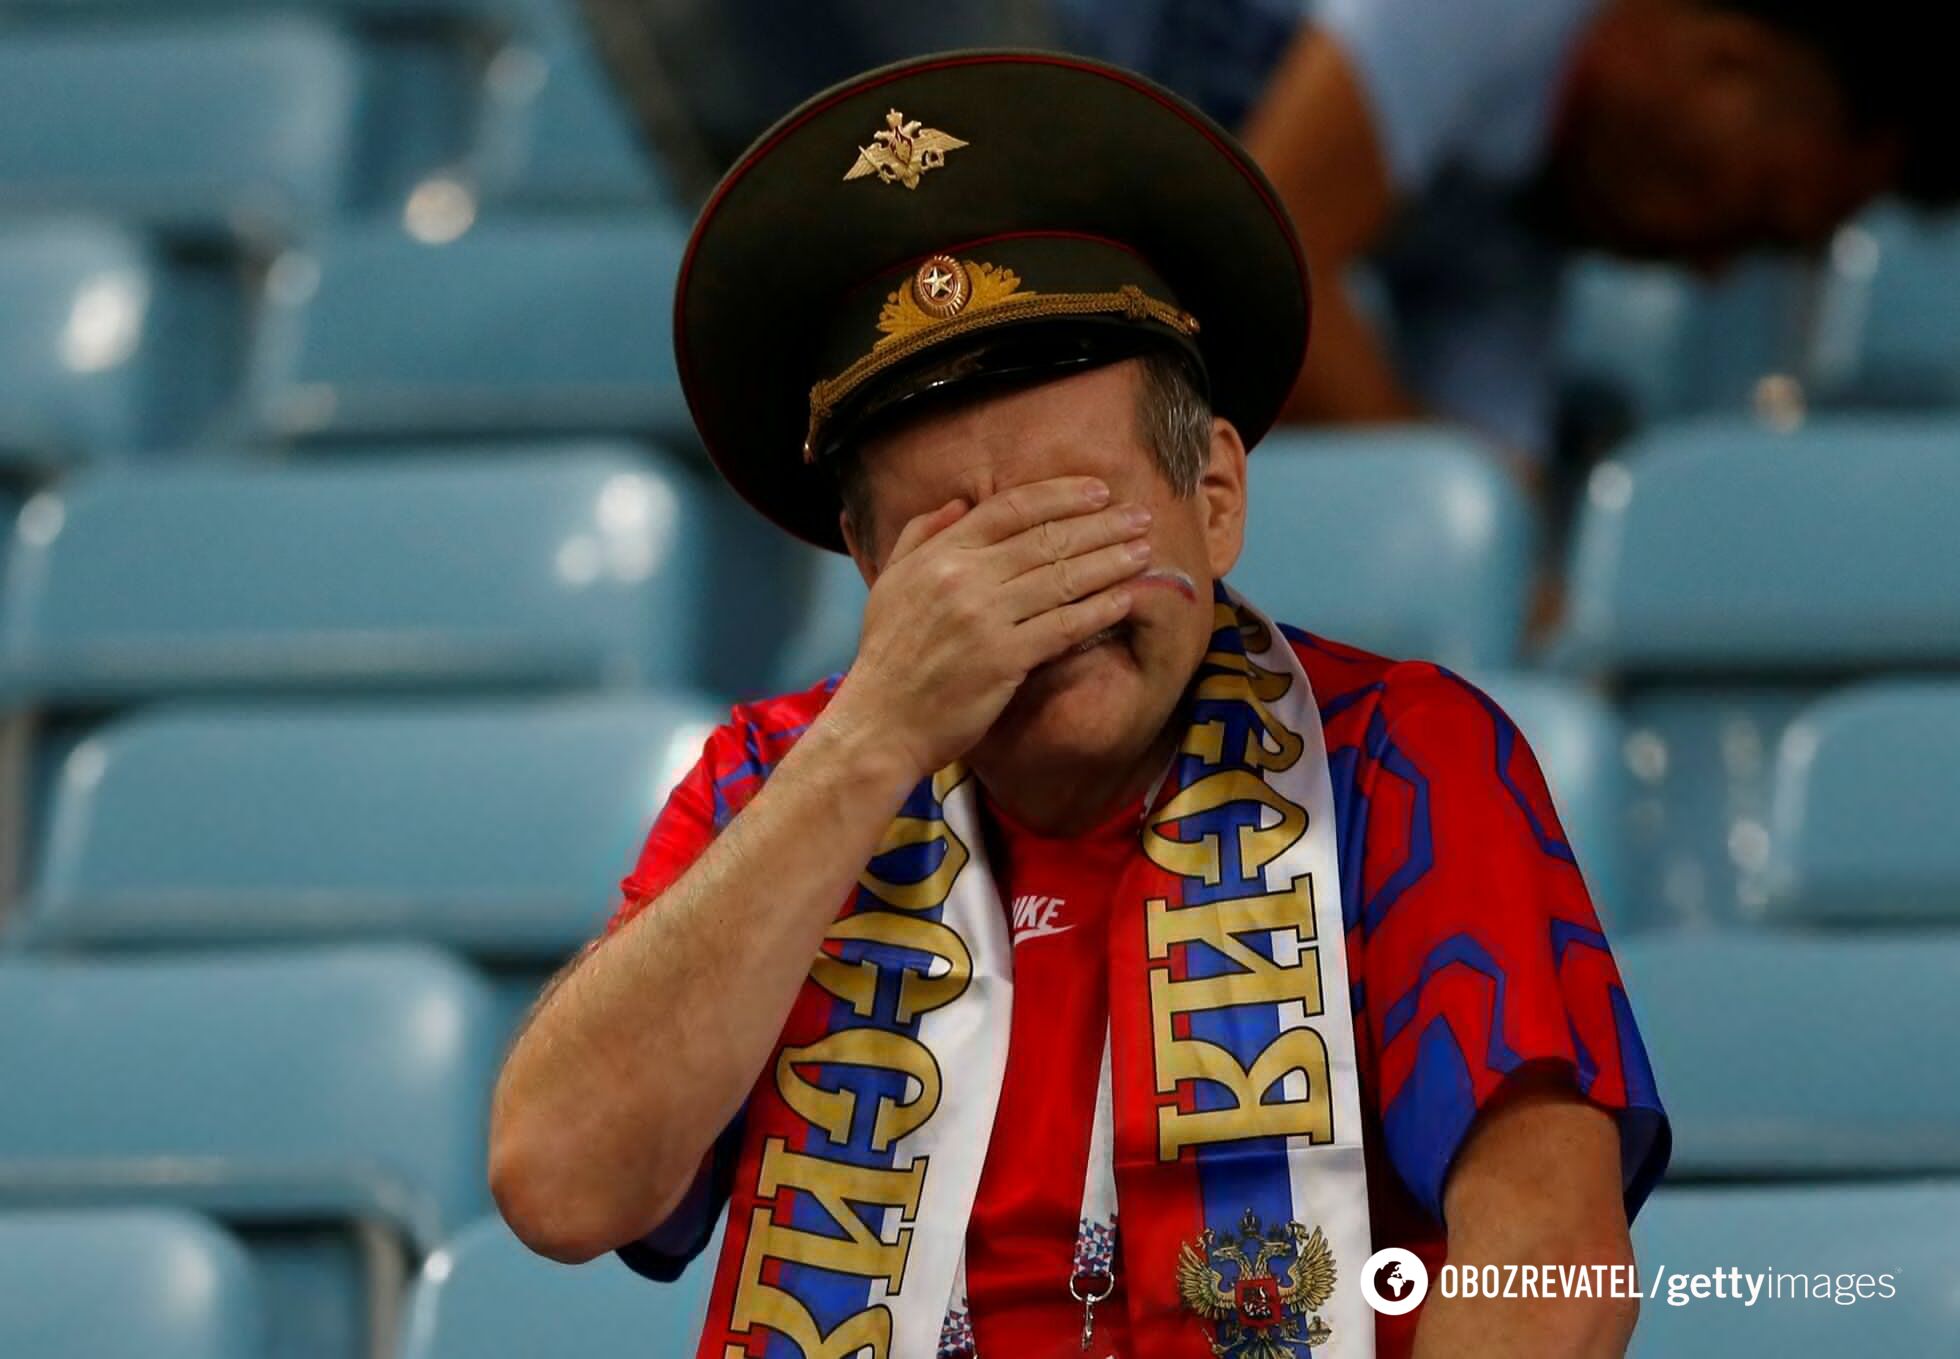 UEFA president says he wants to admit Russians to 'avoid brainwashing children'